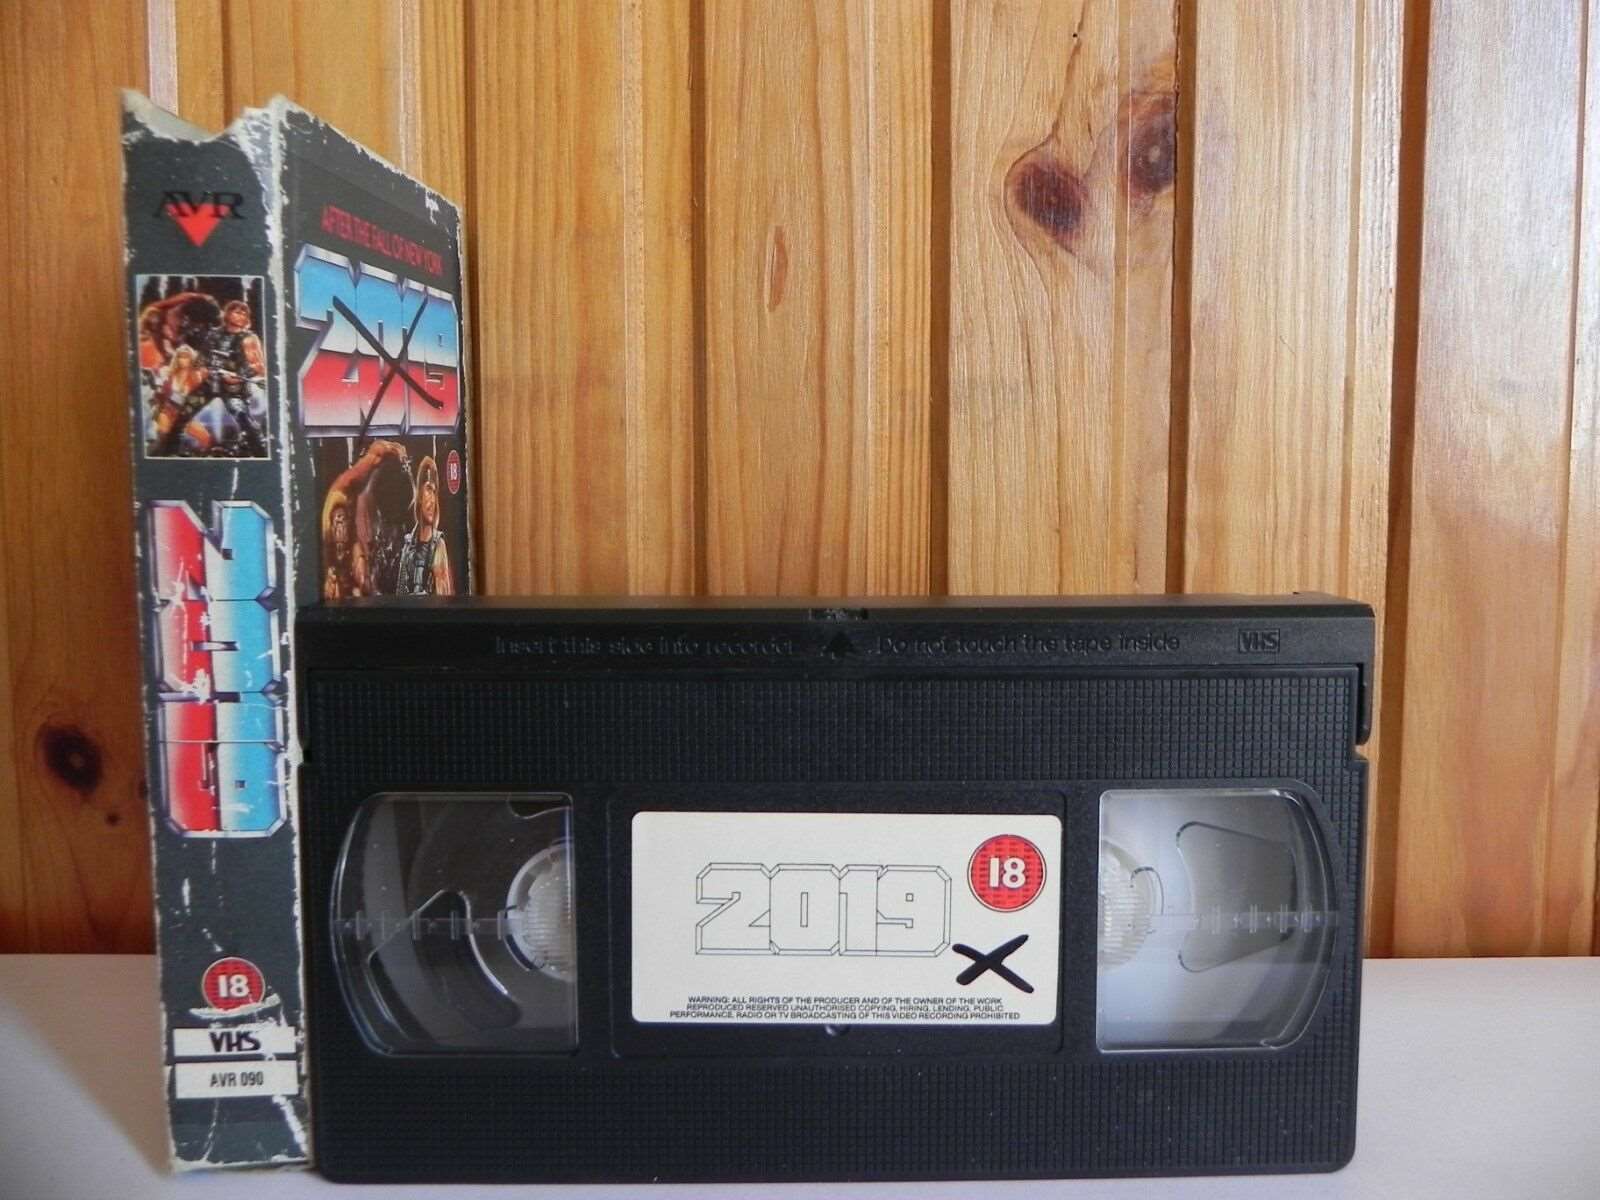 2019 - AVR - Sci-Fi - Carton - Cert (18) - After The Fall Of New York - Pal VHS-